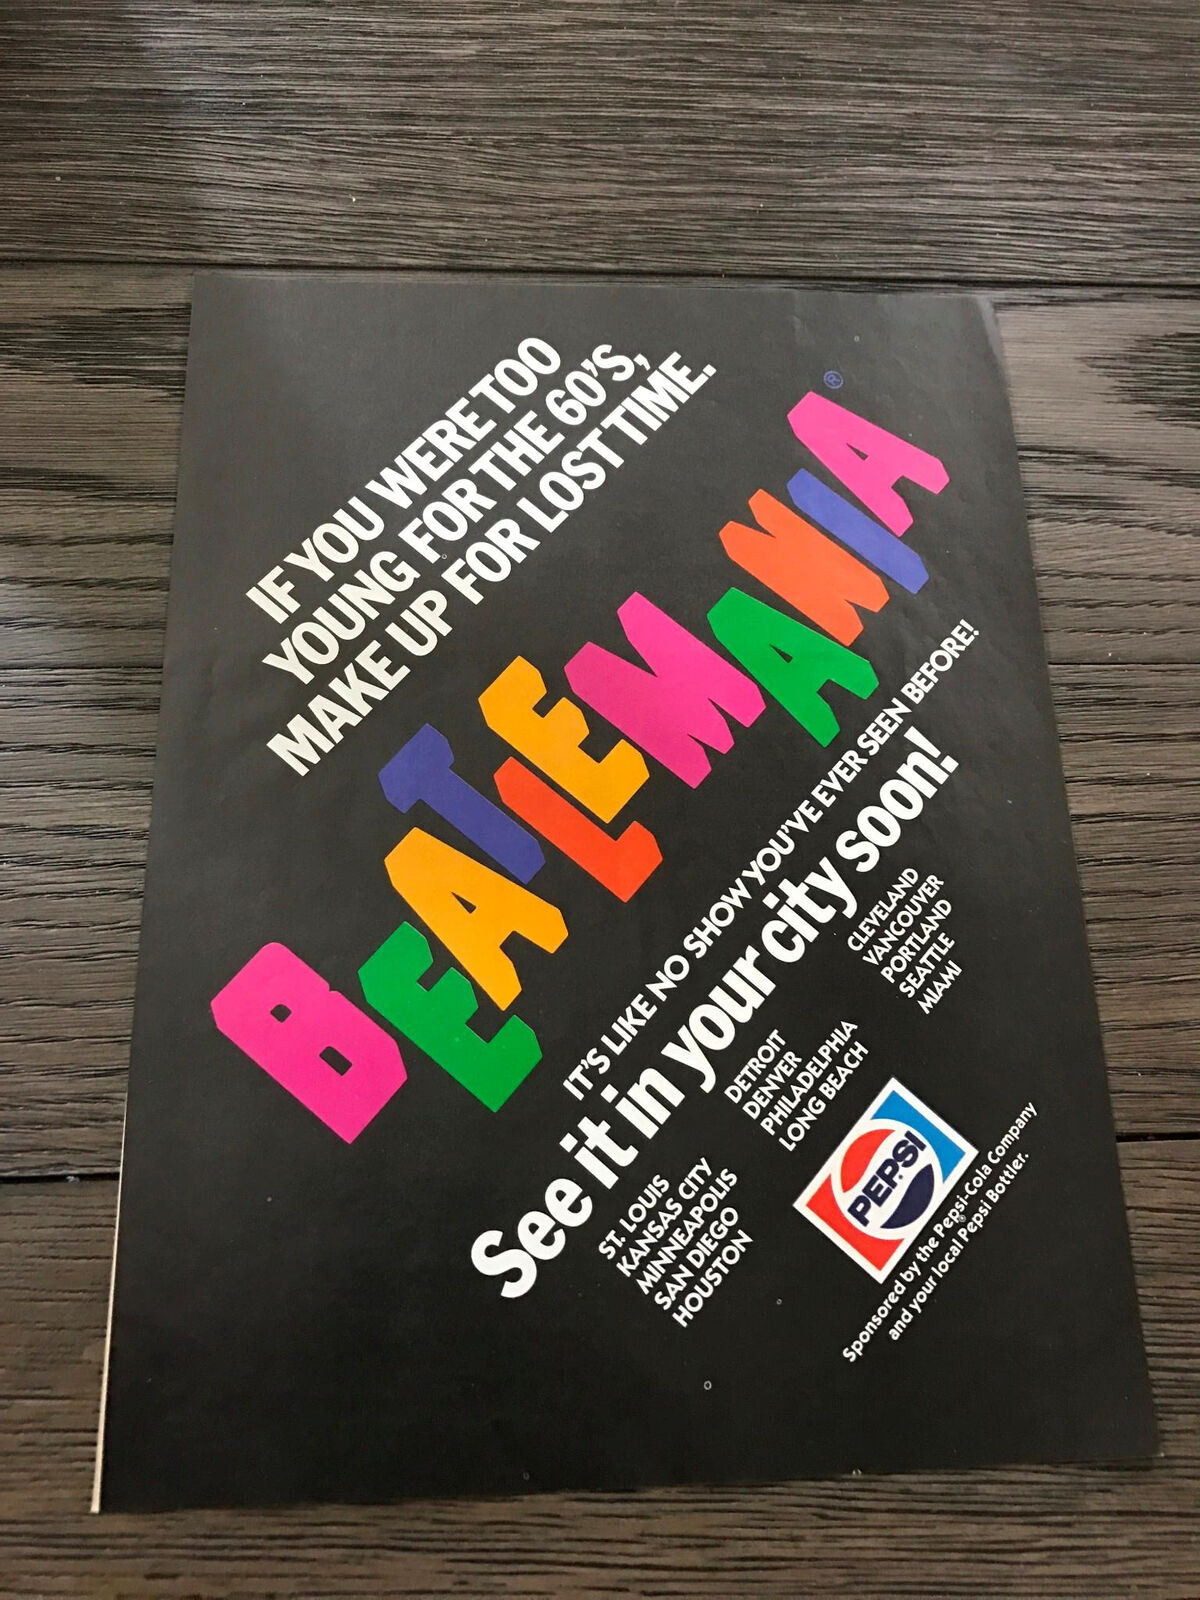 1979 VINTAGE PROMO 8X11 PRINT AD FOR PEPSI + BEATLEMANIA BEATLES